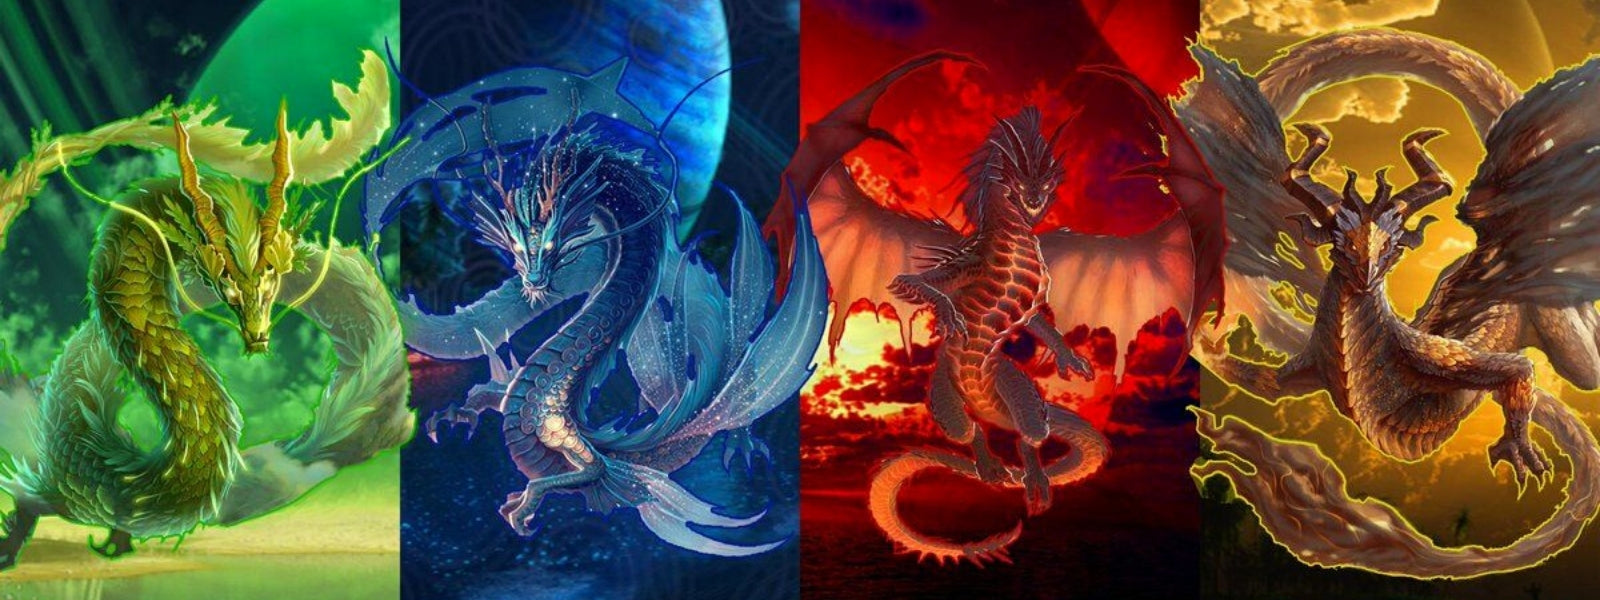 signification des dragons